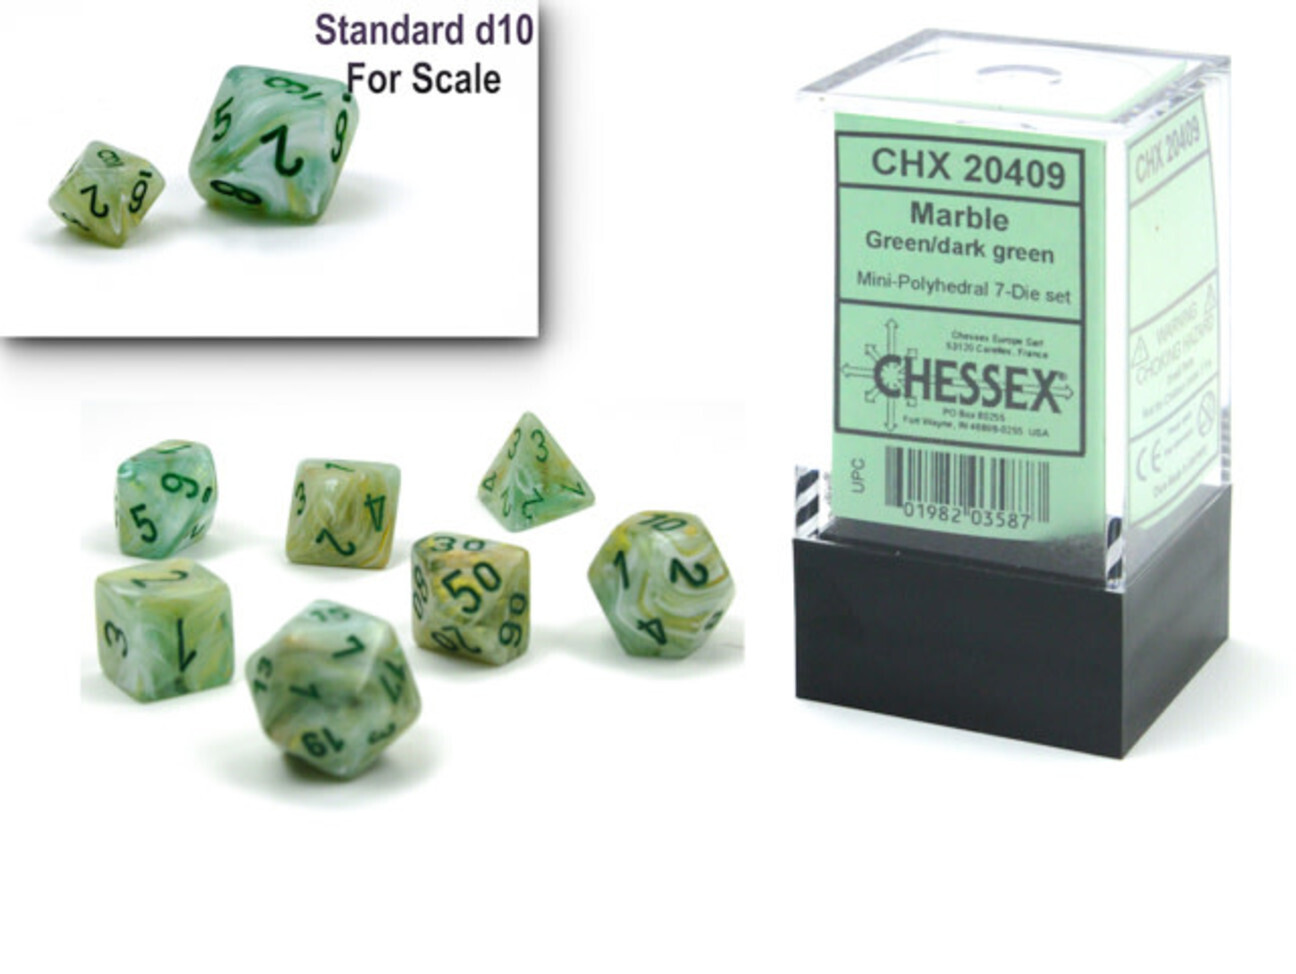 Marble Mini-Polyhedral Green/dark green 7-Die Set - Chessex